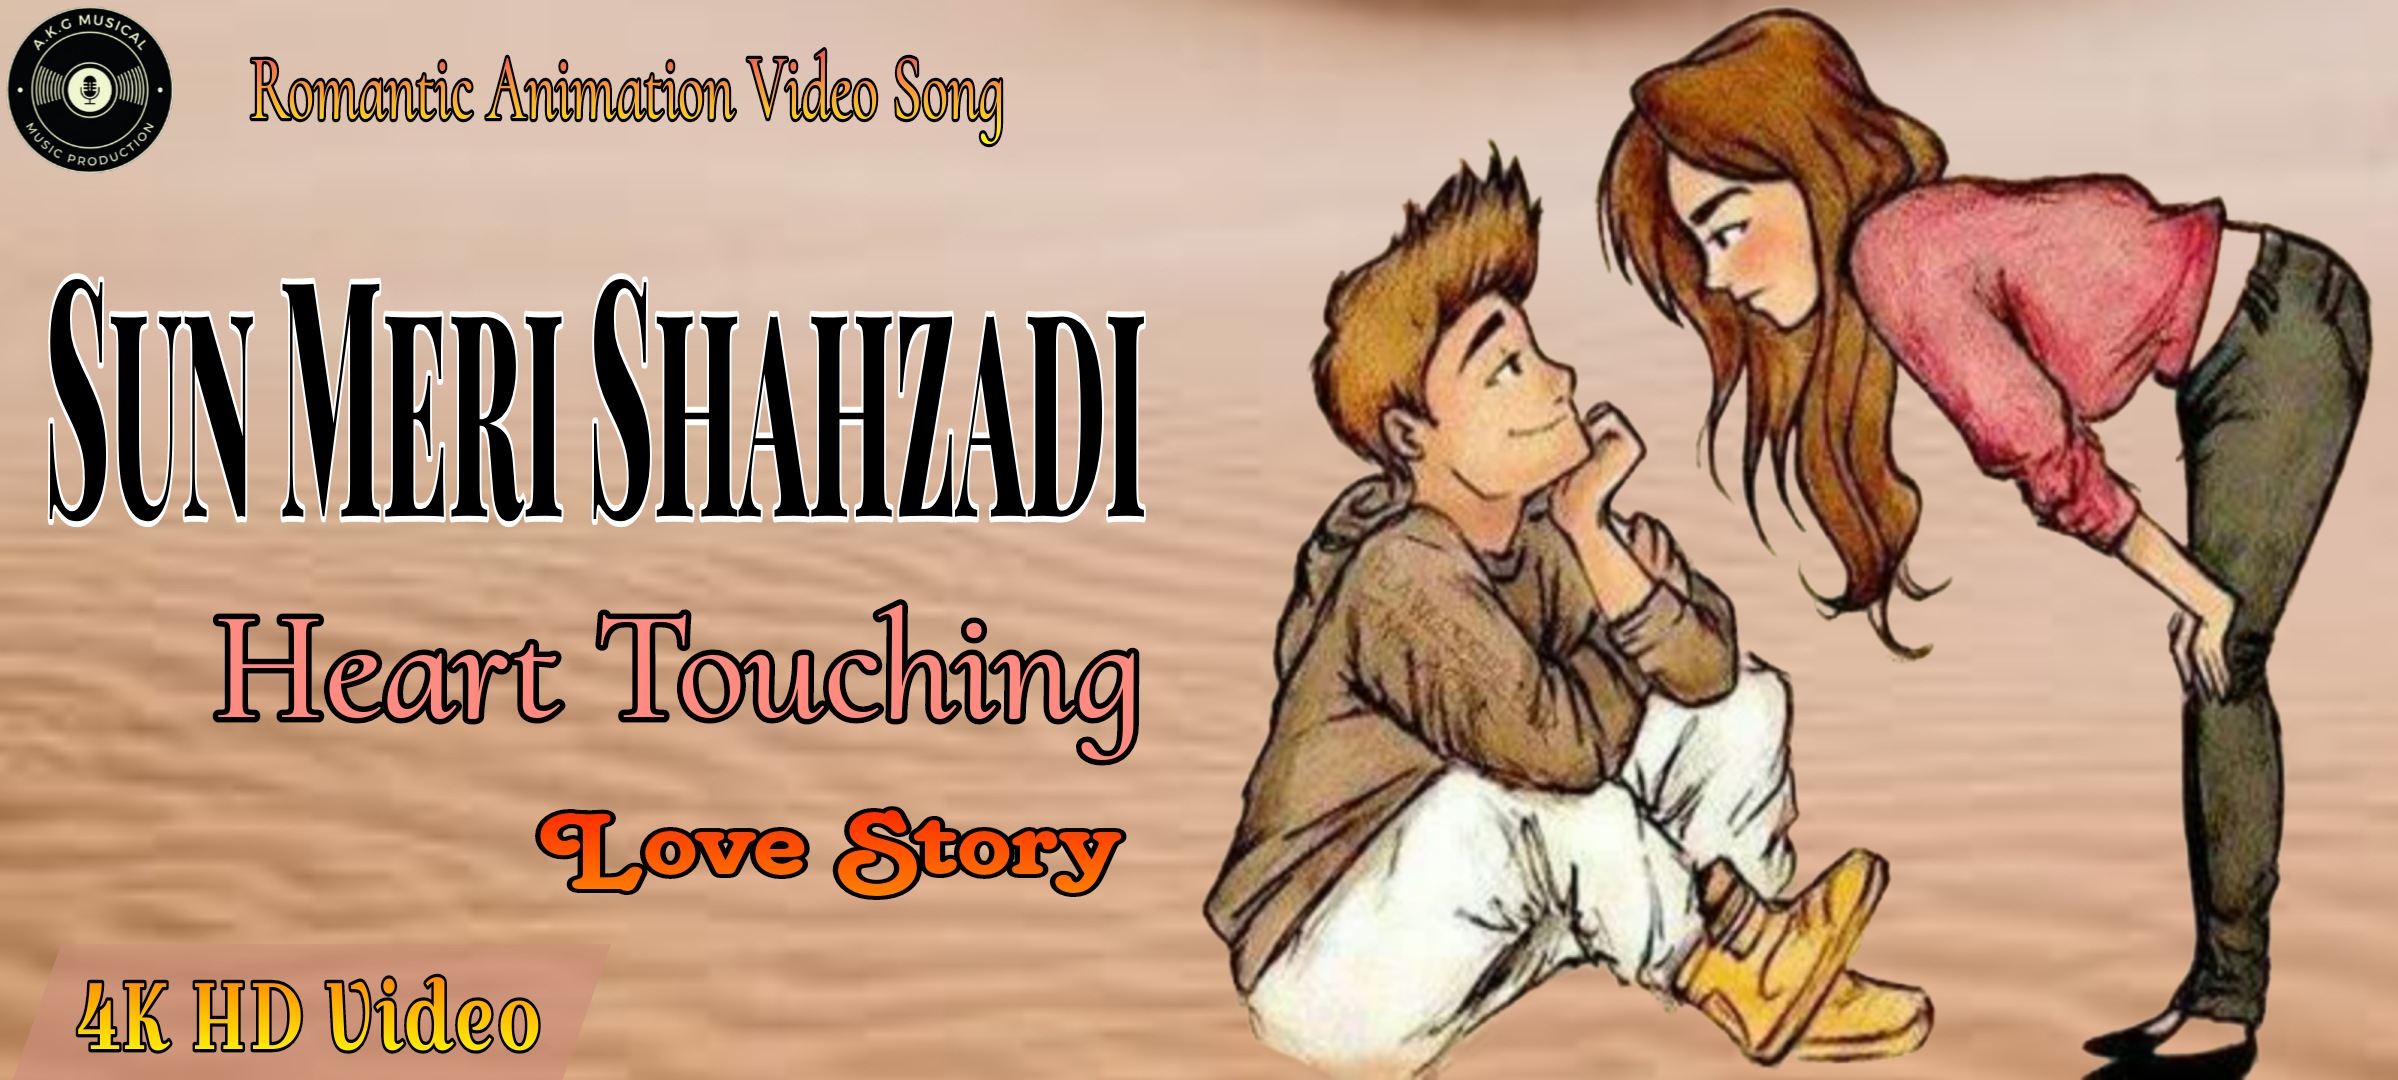 Sun Meri Shehzadi Animated Song | New Animation Video Song | AkgMusicalVideos, Online Event